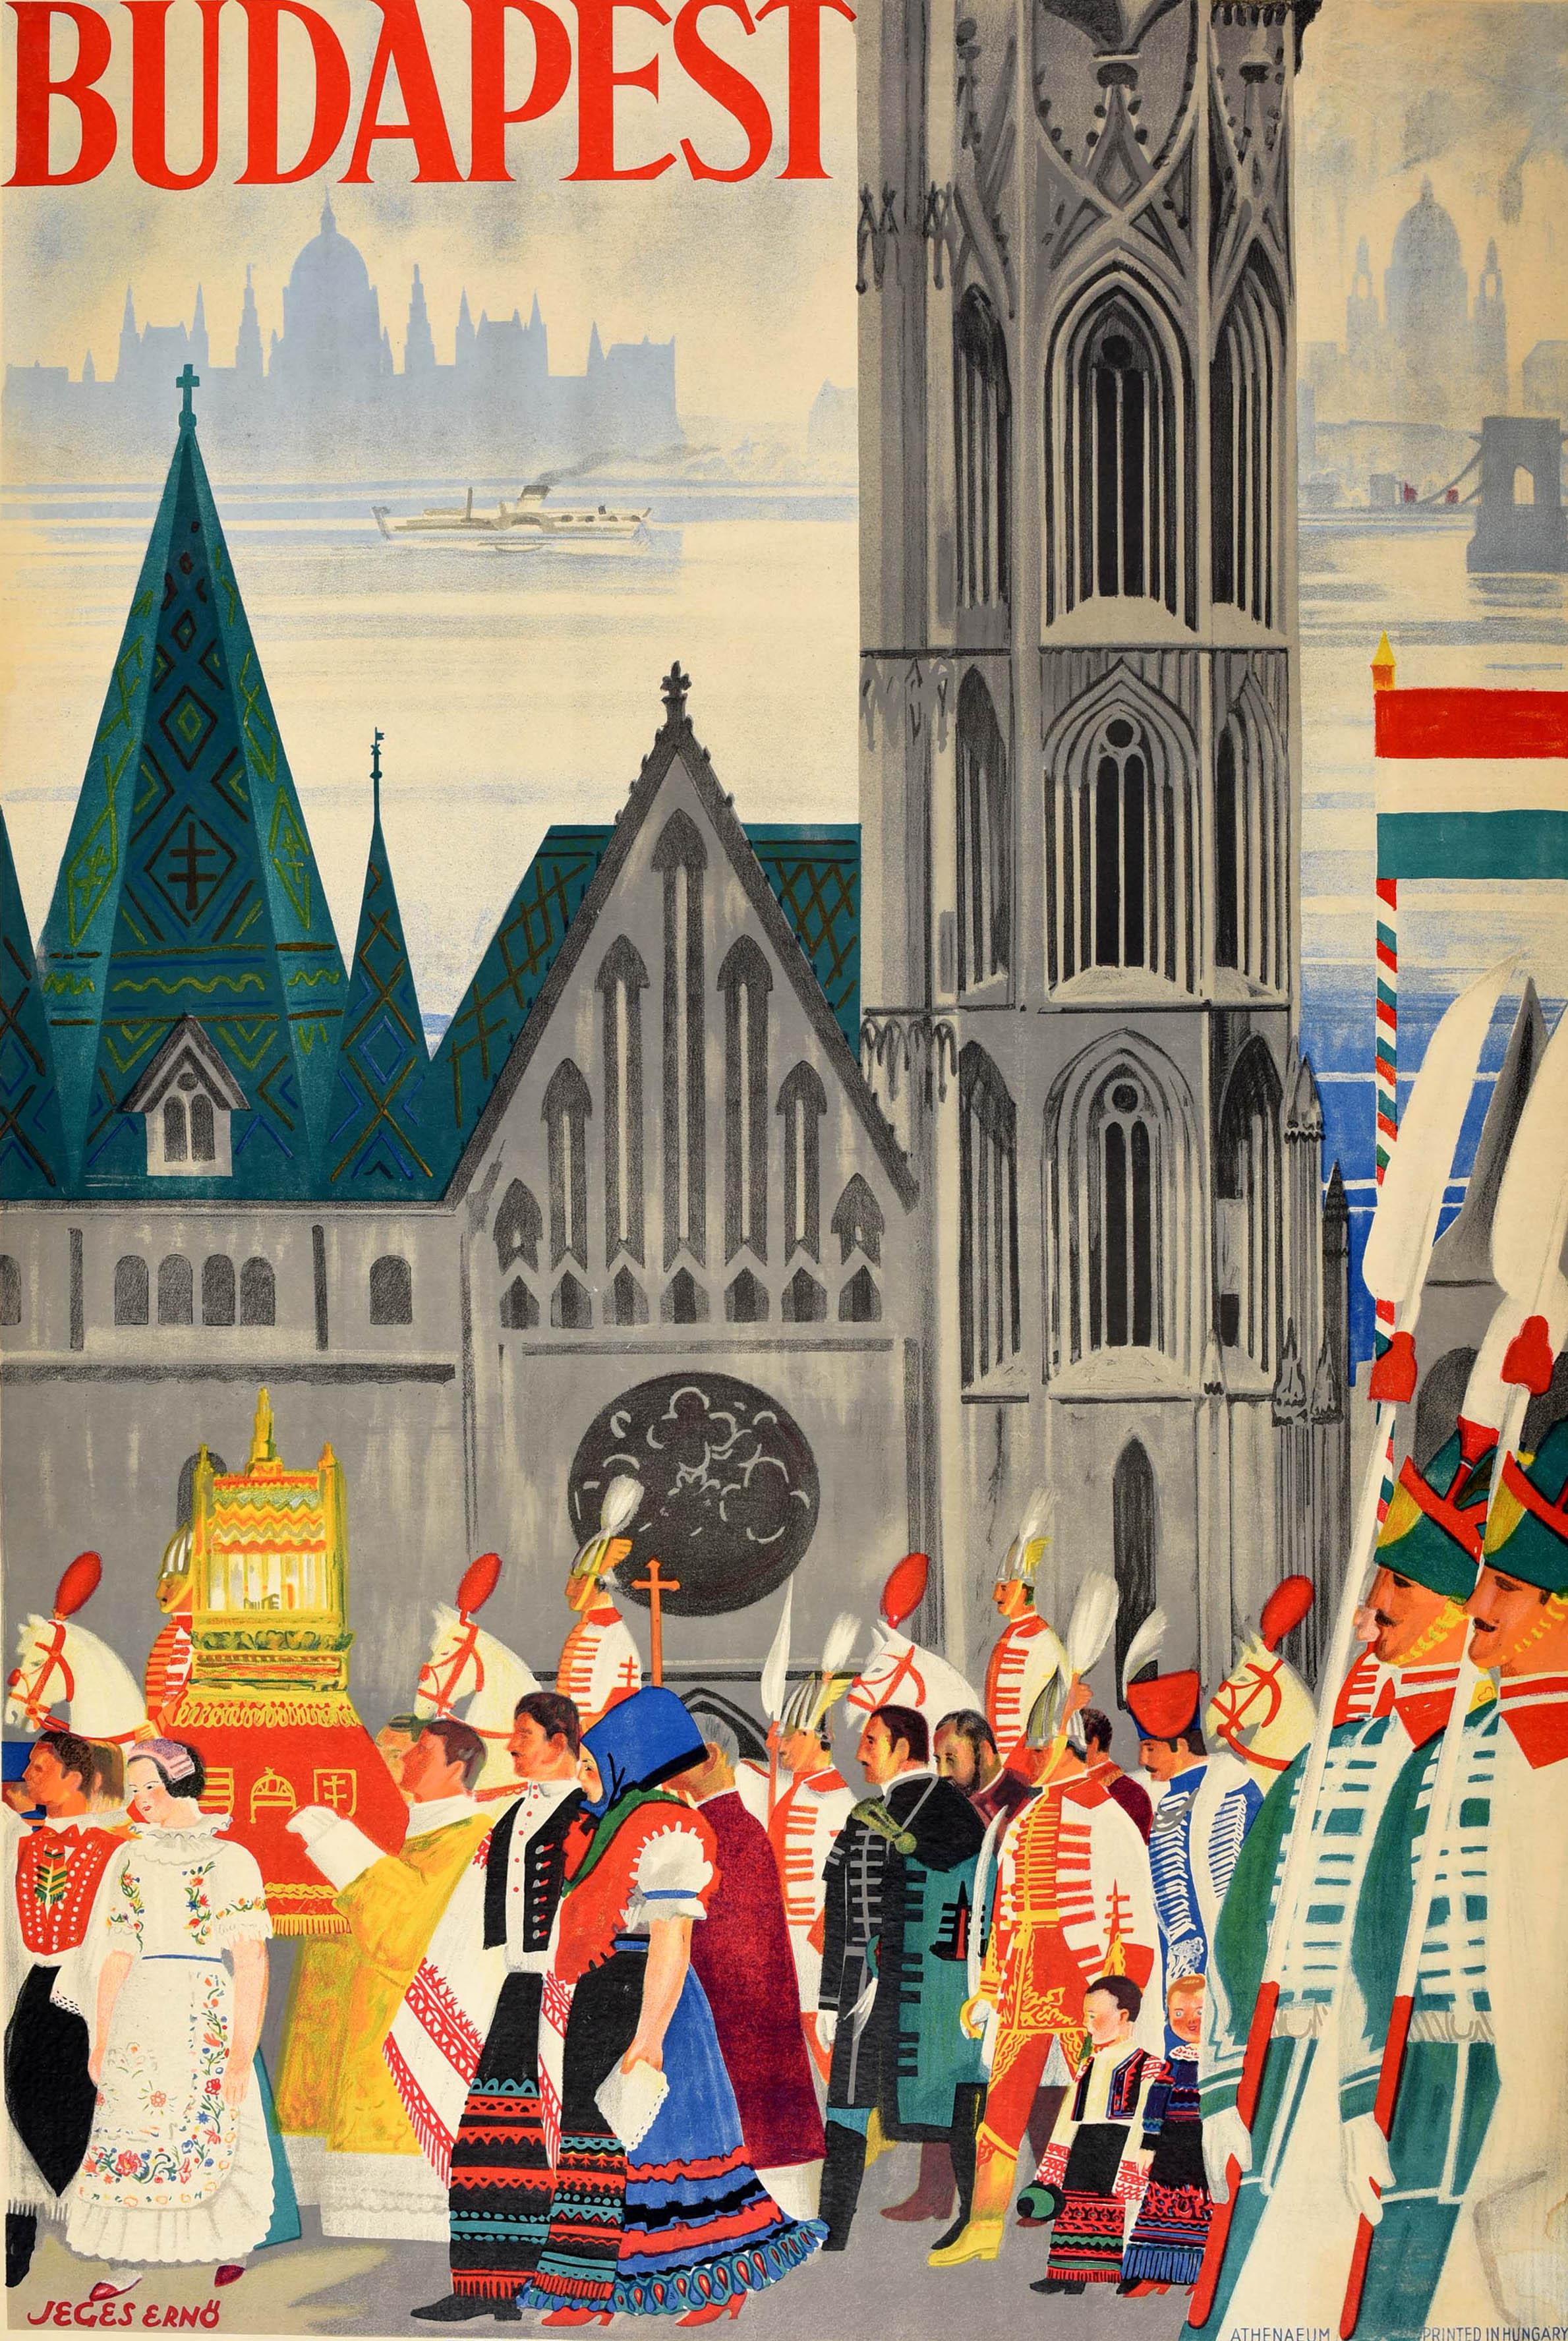 Original Vintage Travel Poster Budapest Art Deco Festival Hungary Church Design - Print by Jeges Erno